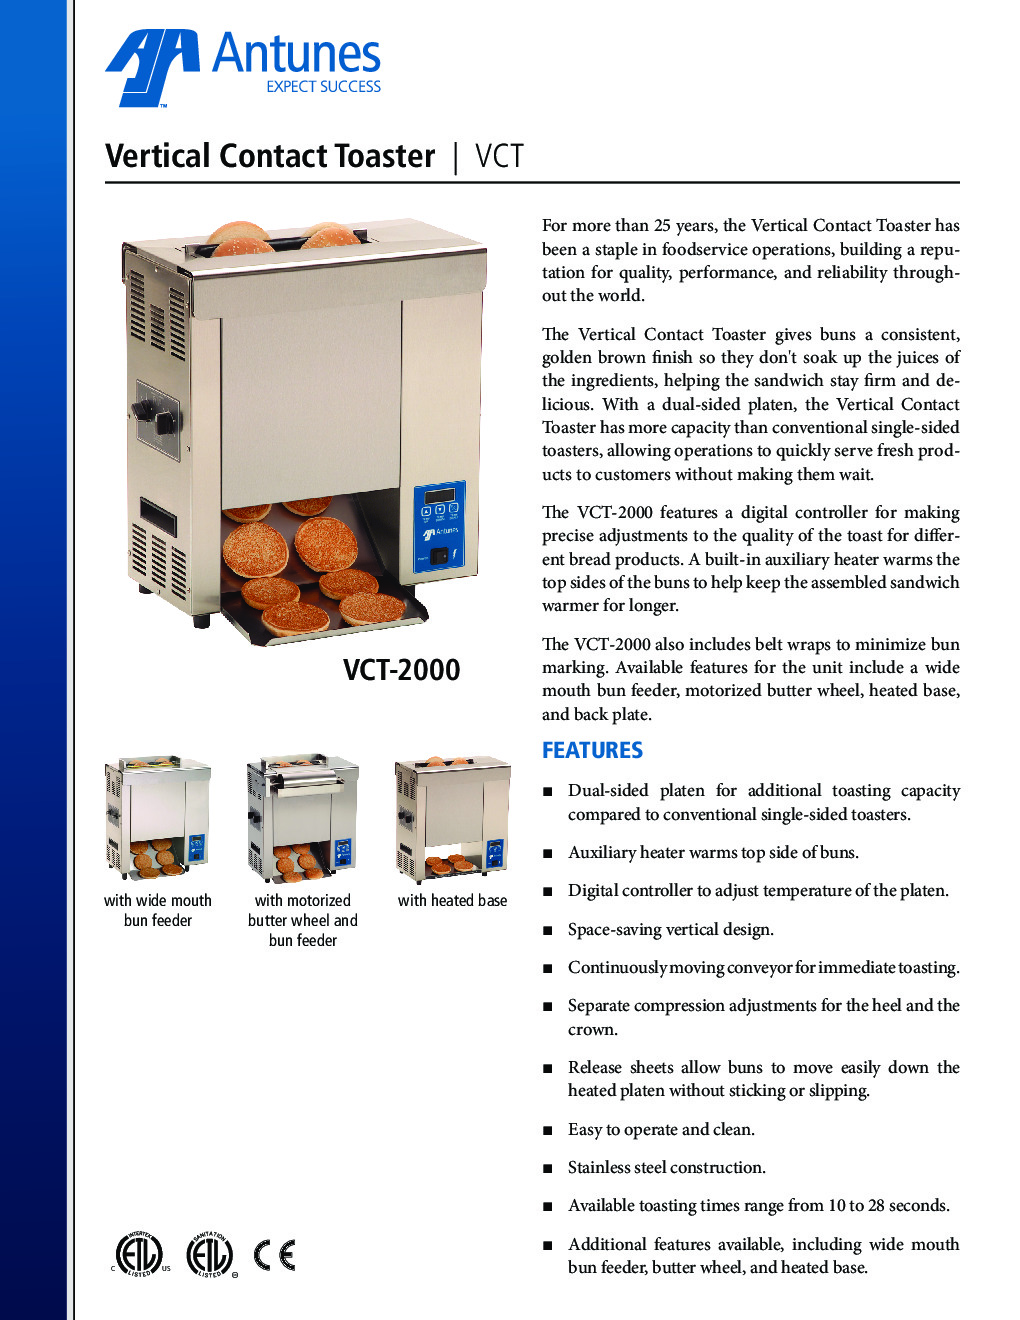 Antunes VCT-2000-9210116 Countertop Conveyor Type Vertical Contact Toaster